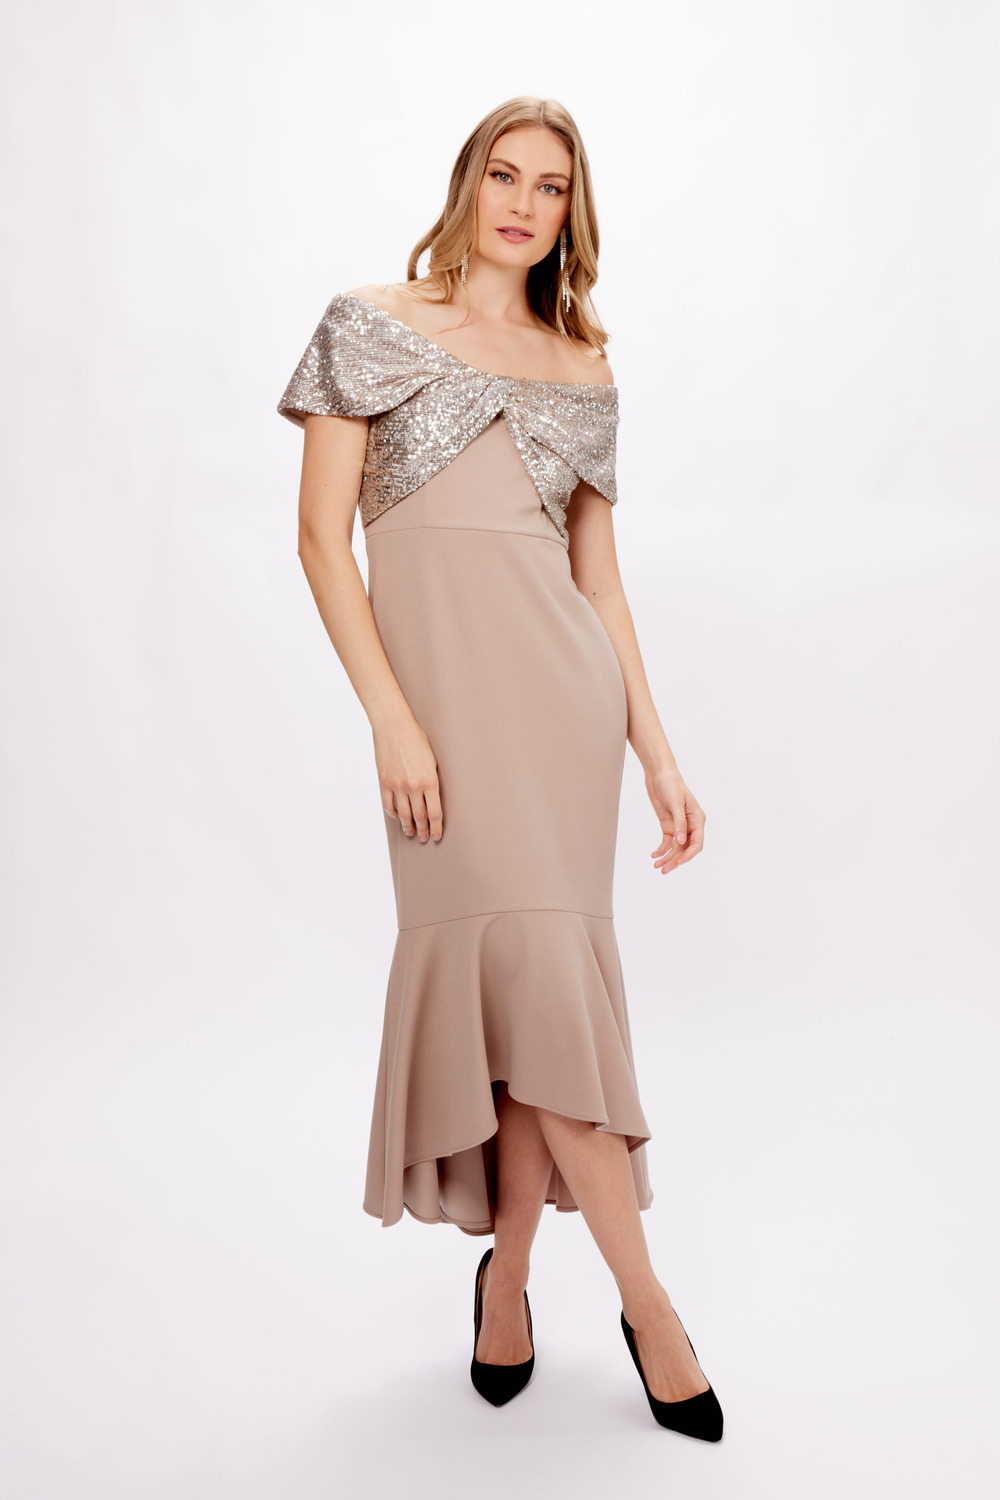 Off-Shoulder High Low Dress Style 233731. Latte/silver